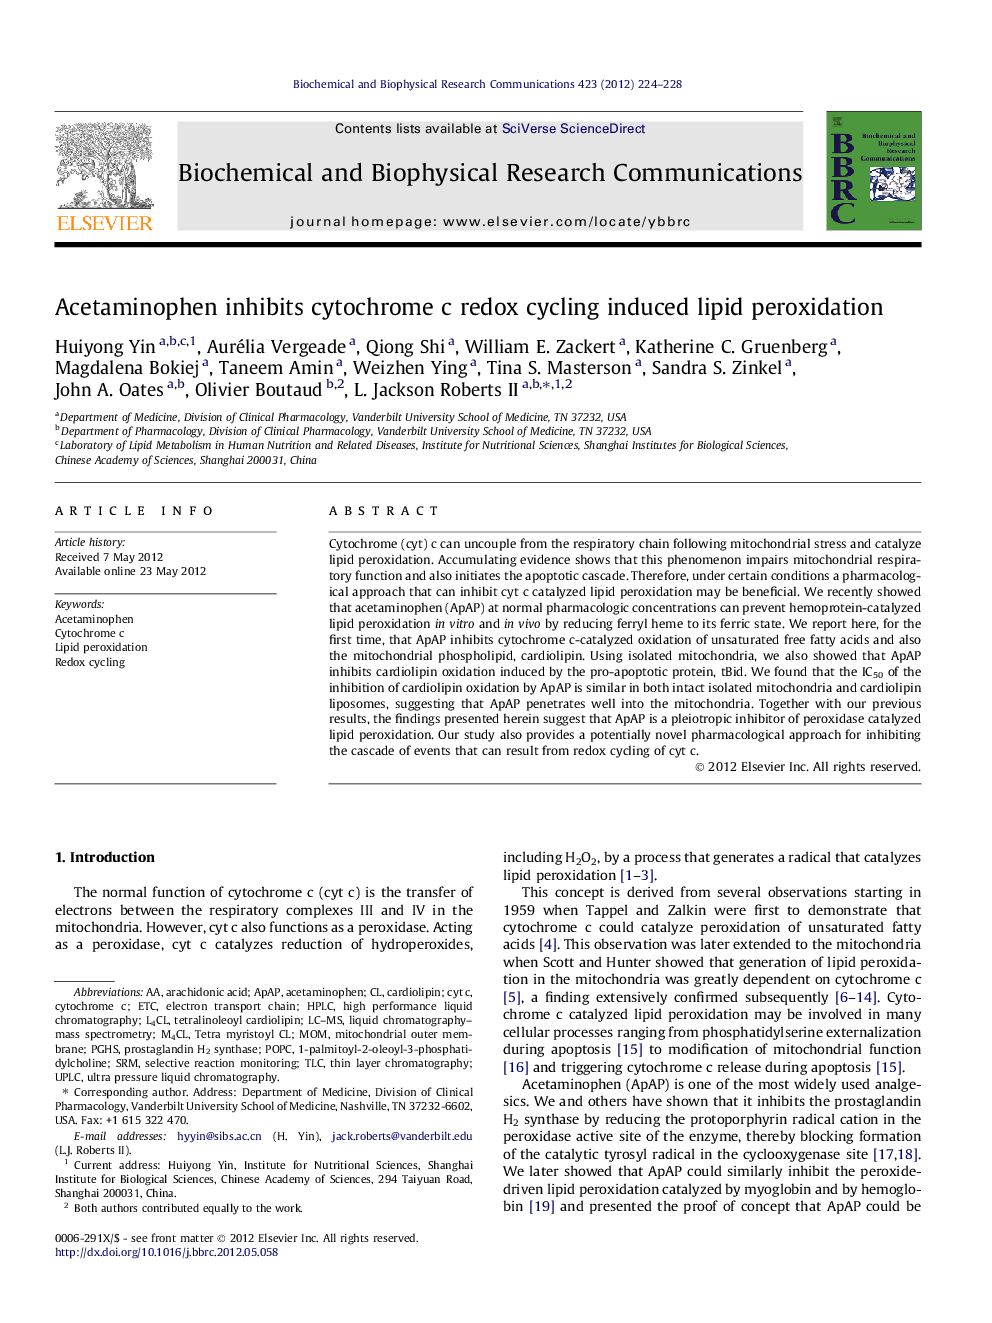 Acetaminophen inhibits cytochrome c redox cycling induced lipid peroxidation